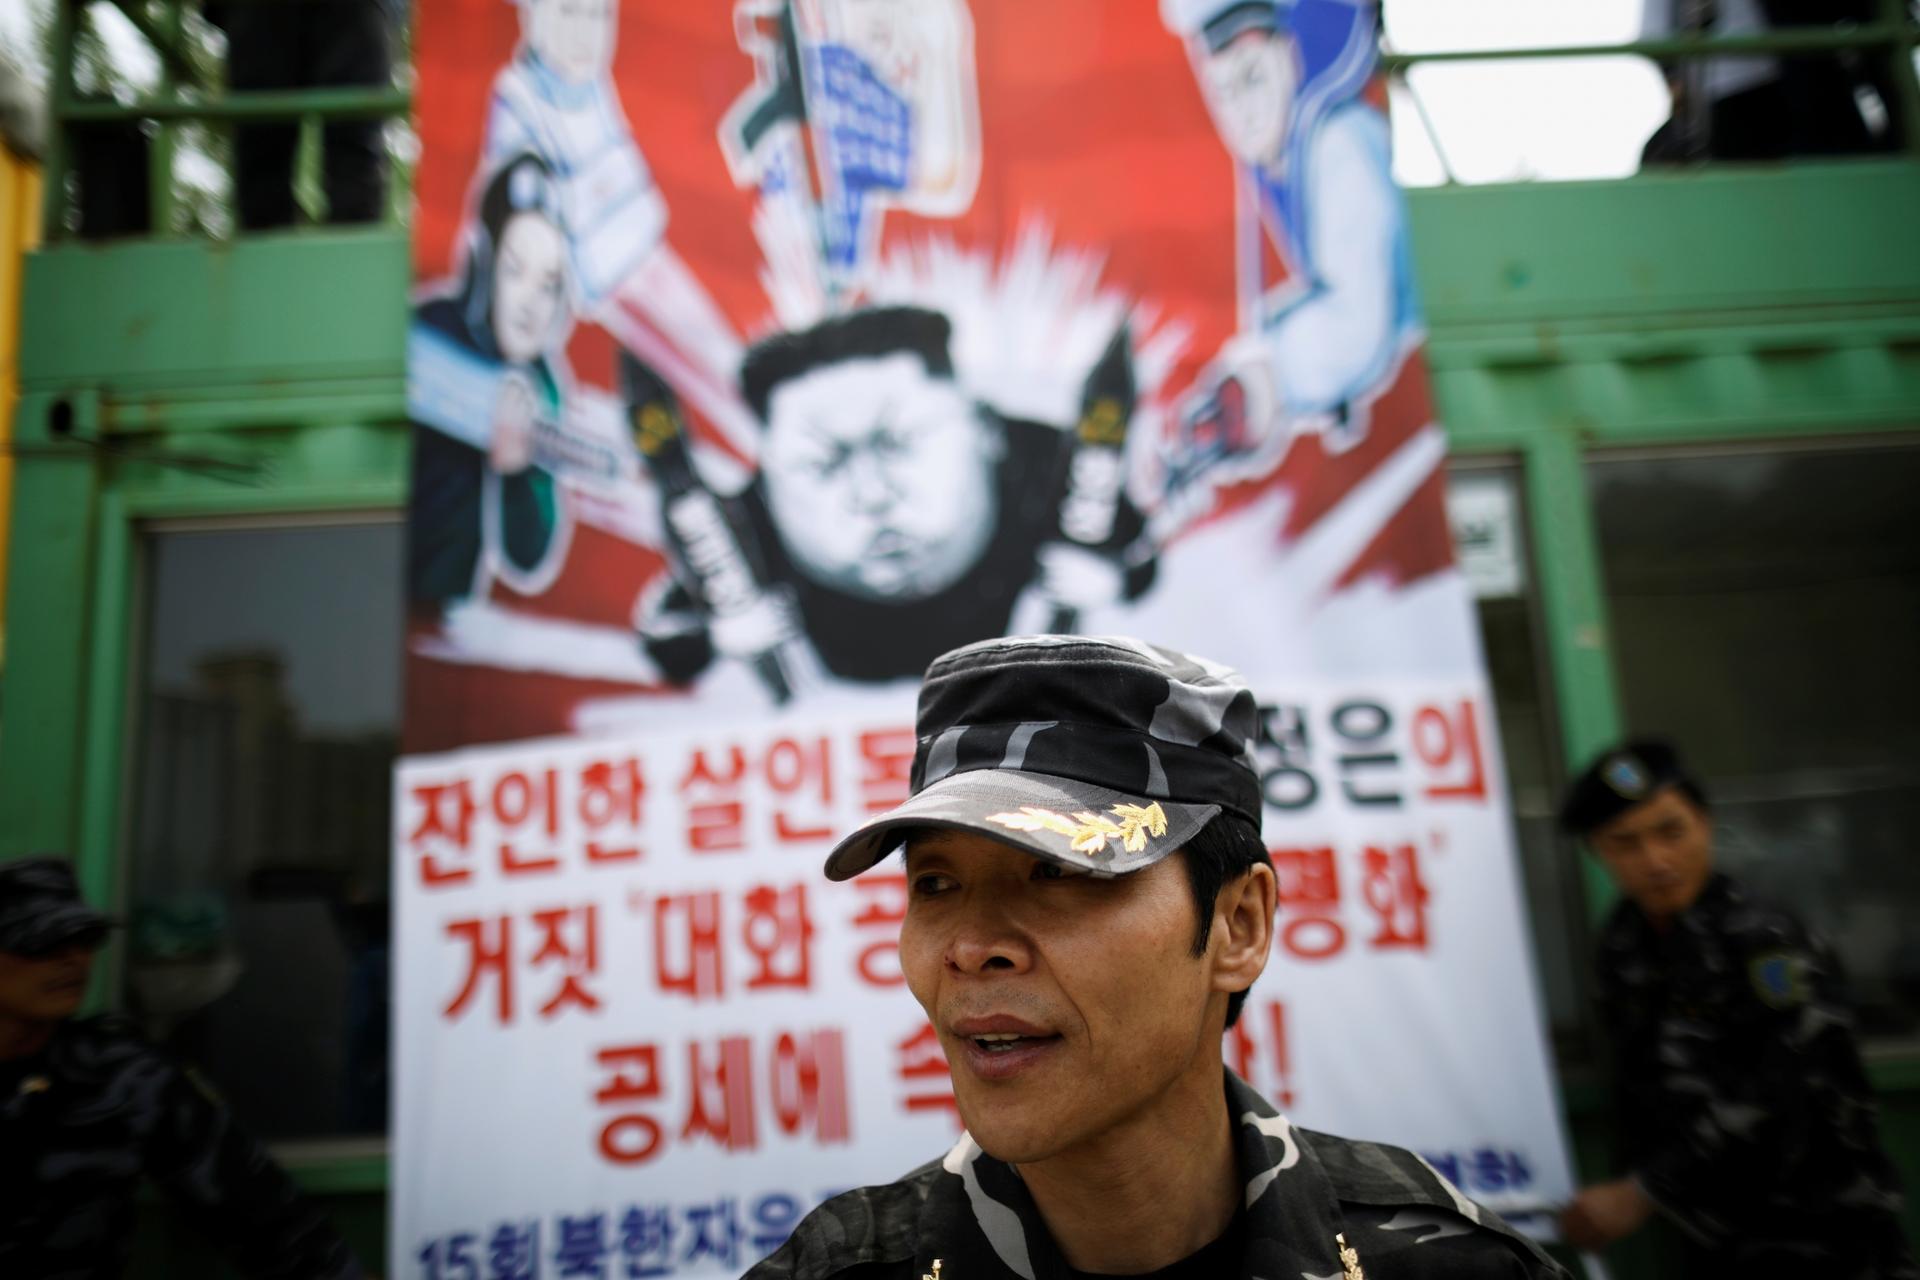 A North Korean defector, a member of an anti-North Korea civic group, prepares to release balloons containing leaflets denouncing North Korean leader Kim Jong-un